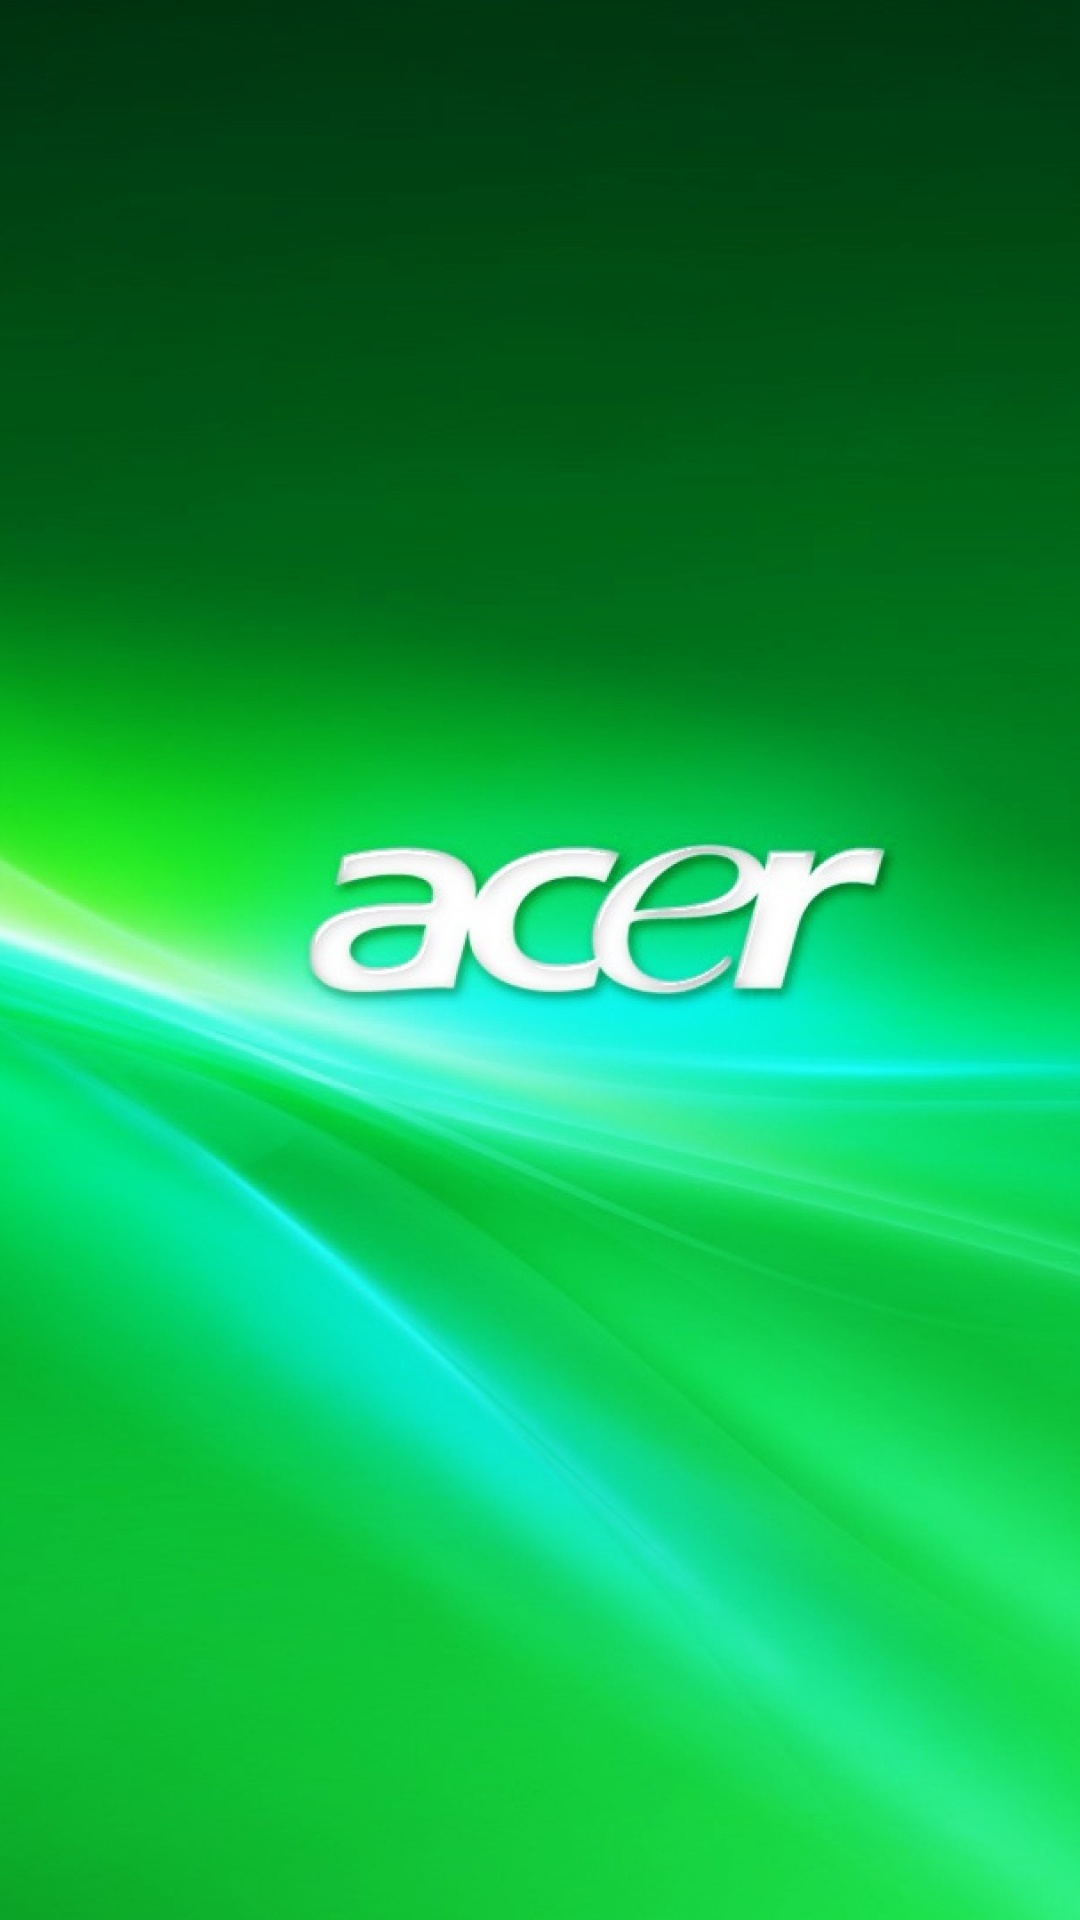 Acer, Windows 10, Green, Light, Graphics. Wallpaper in 1080x1920 Resolution